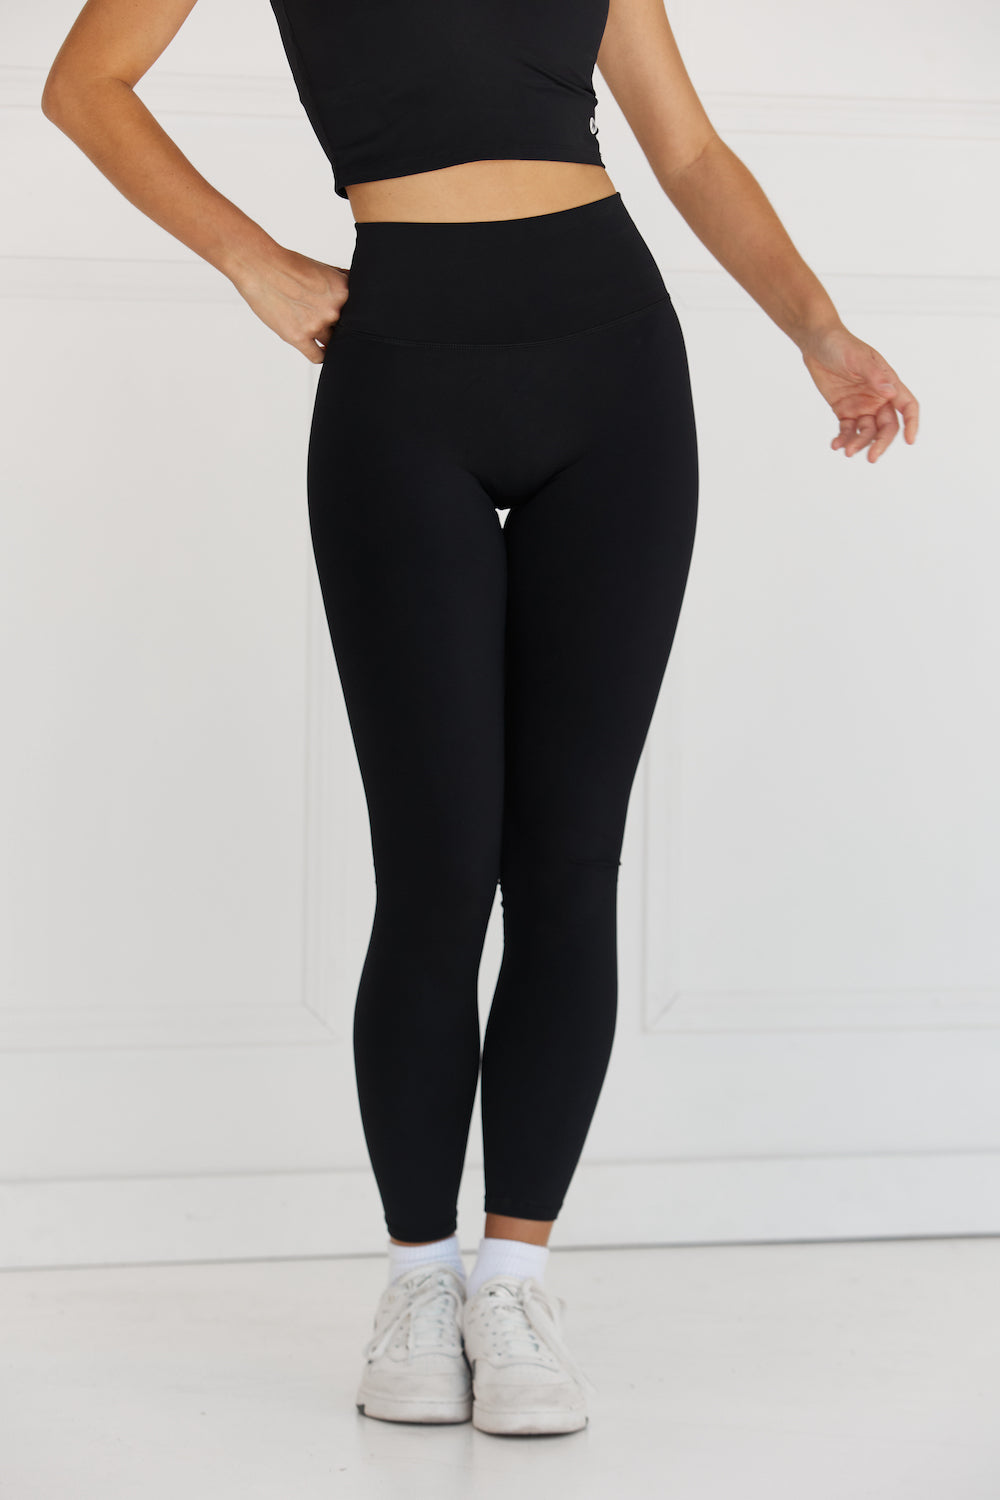 Astoria activewear VELOCITY Seamless Legging - Black - 5 requests